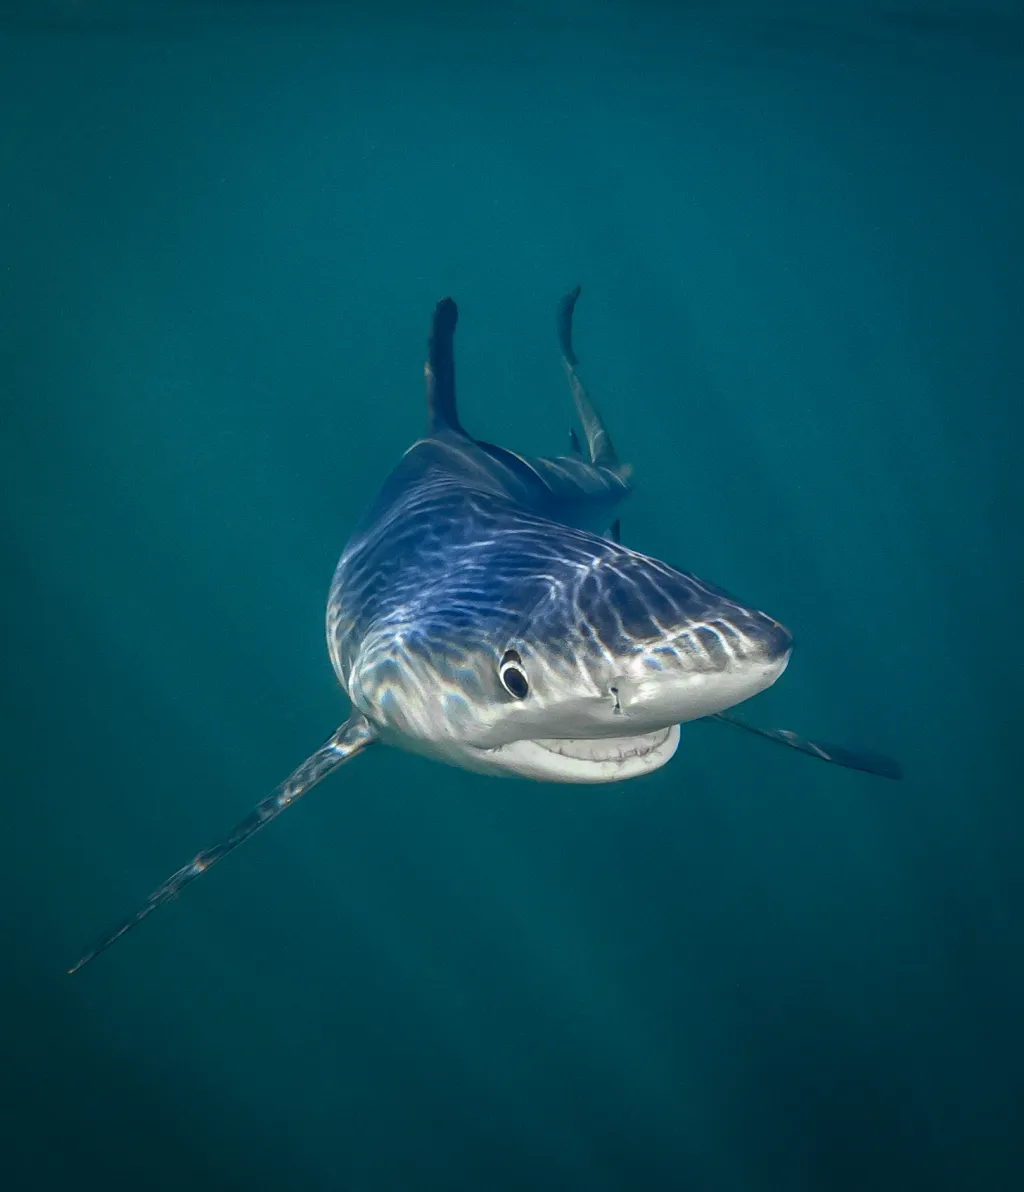 Modrý žralok před kamerou (Rhode Island, USA)